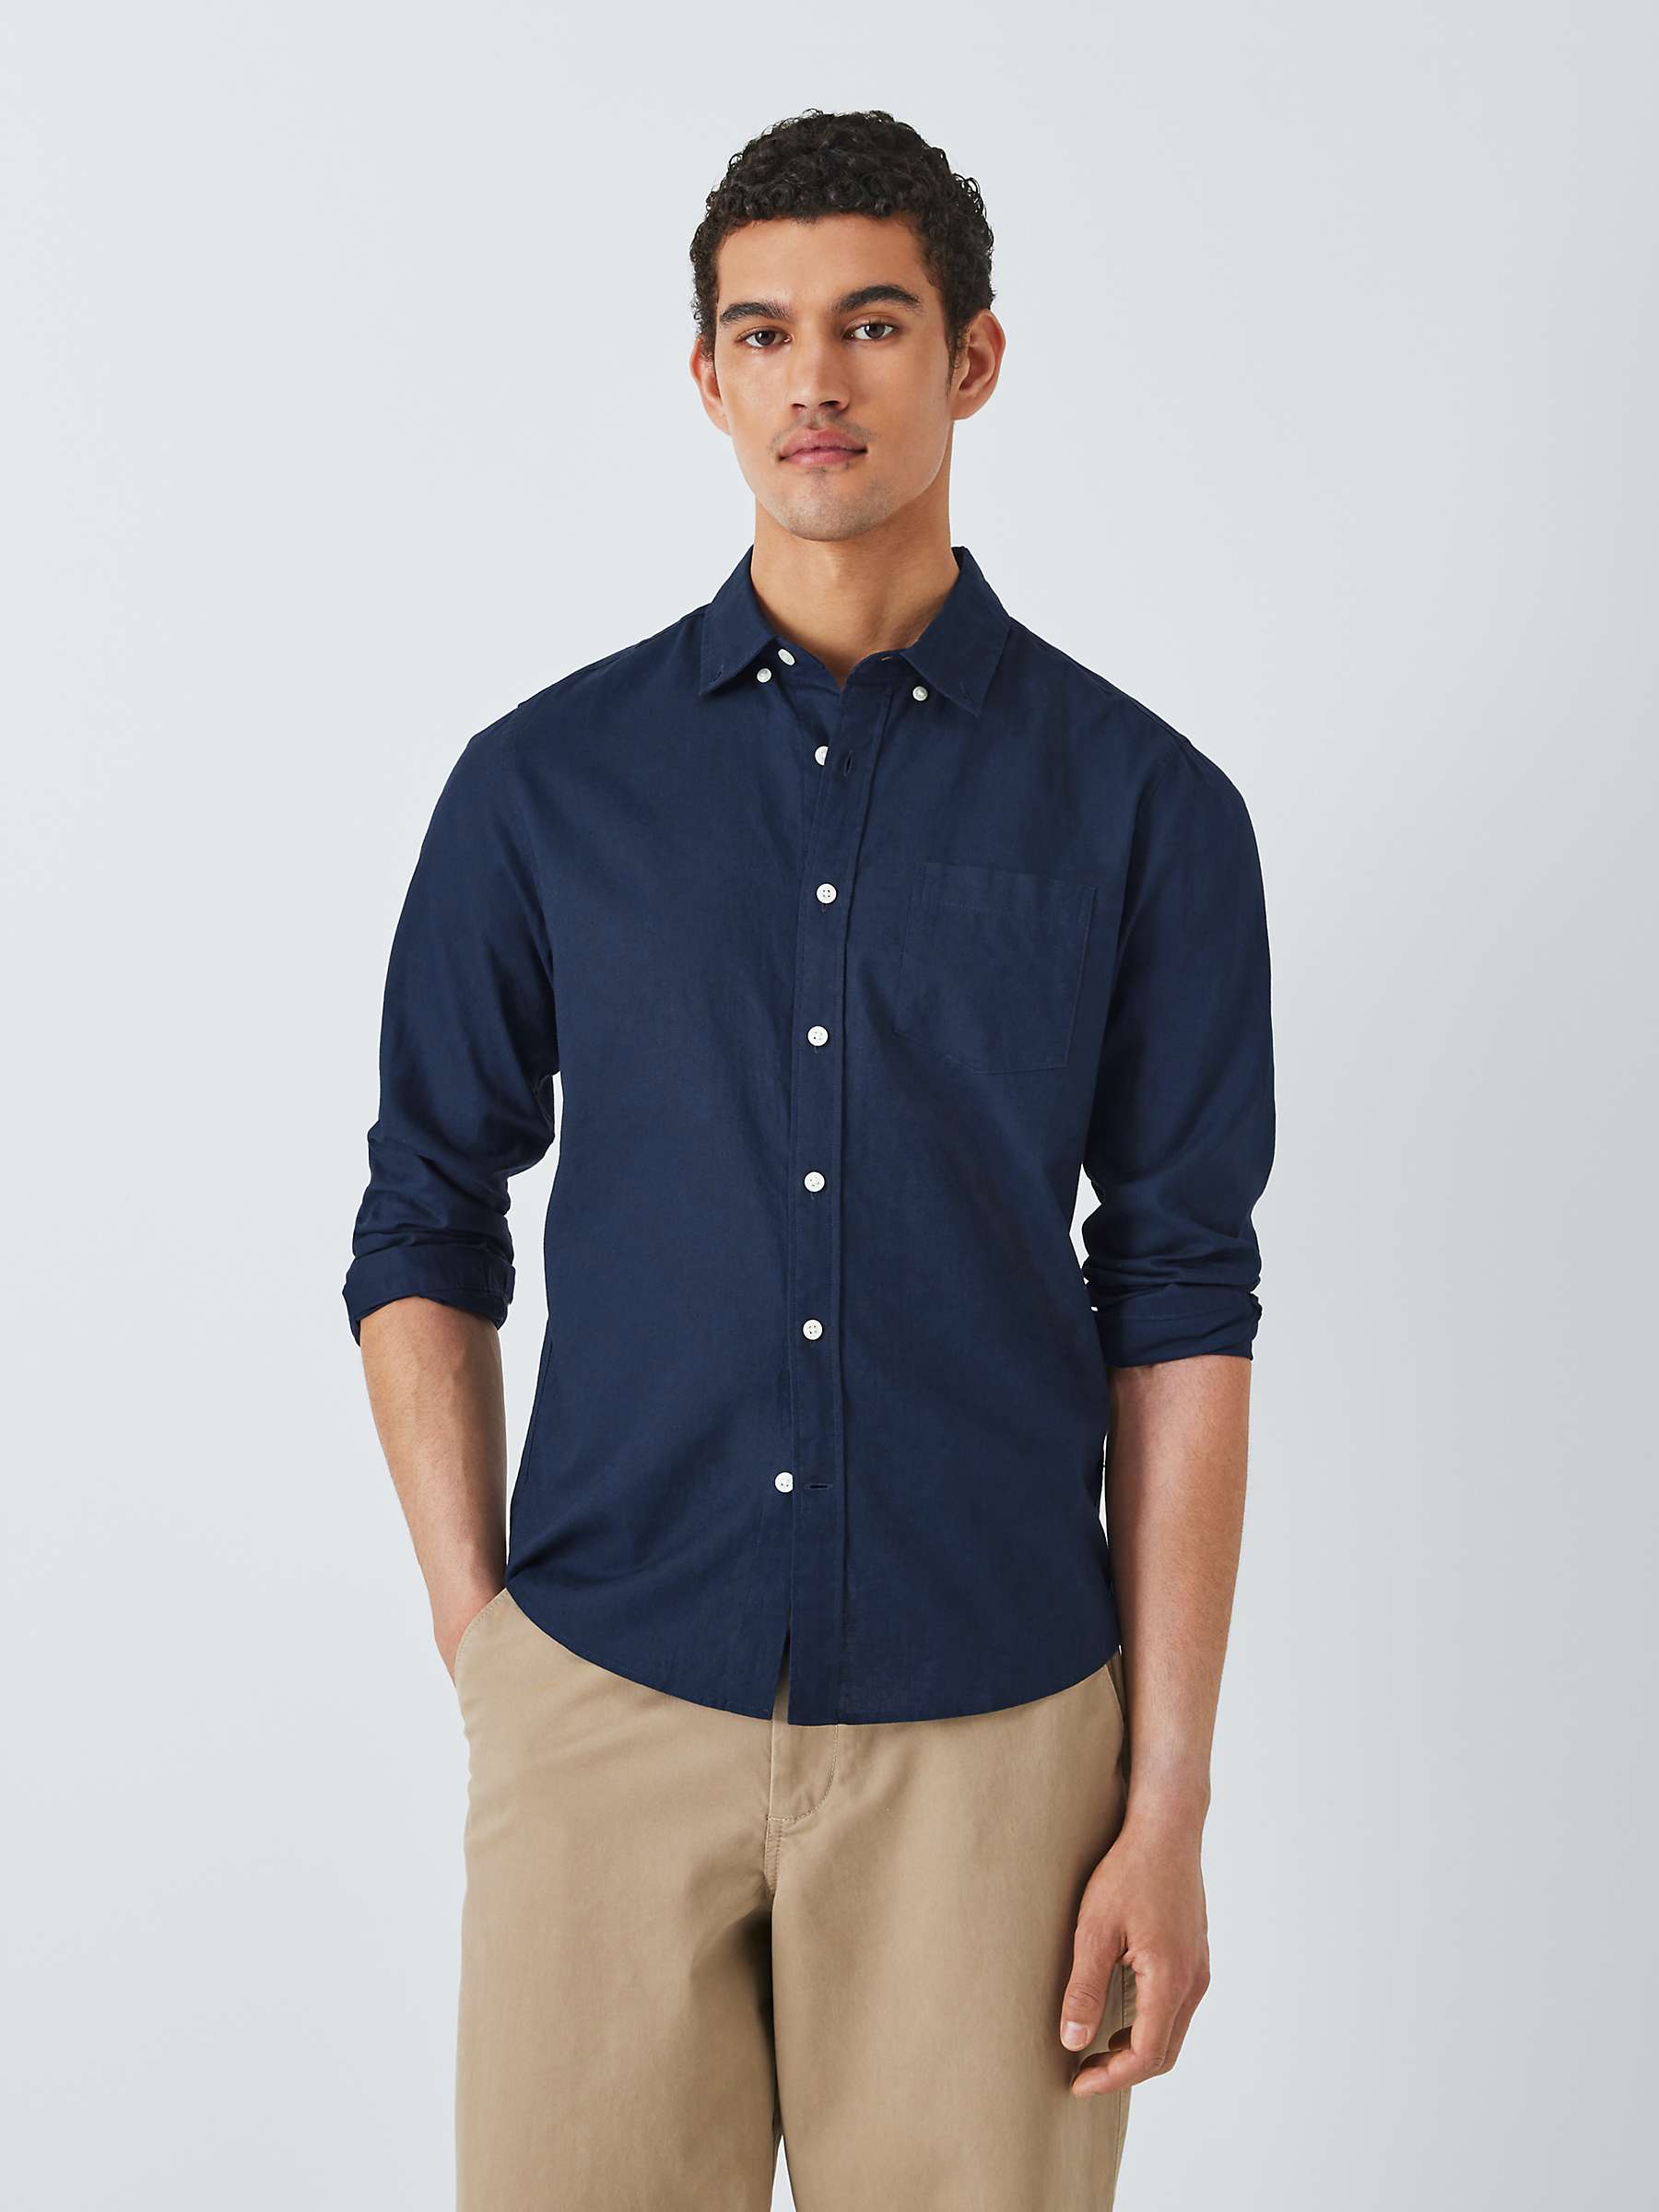 Buy John Lewis Linen Blend Long Sleeve Shirt, Navy Online at johnlewis.com